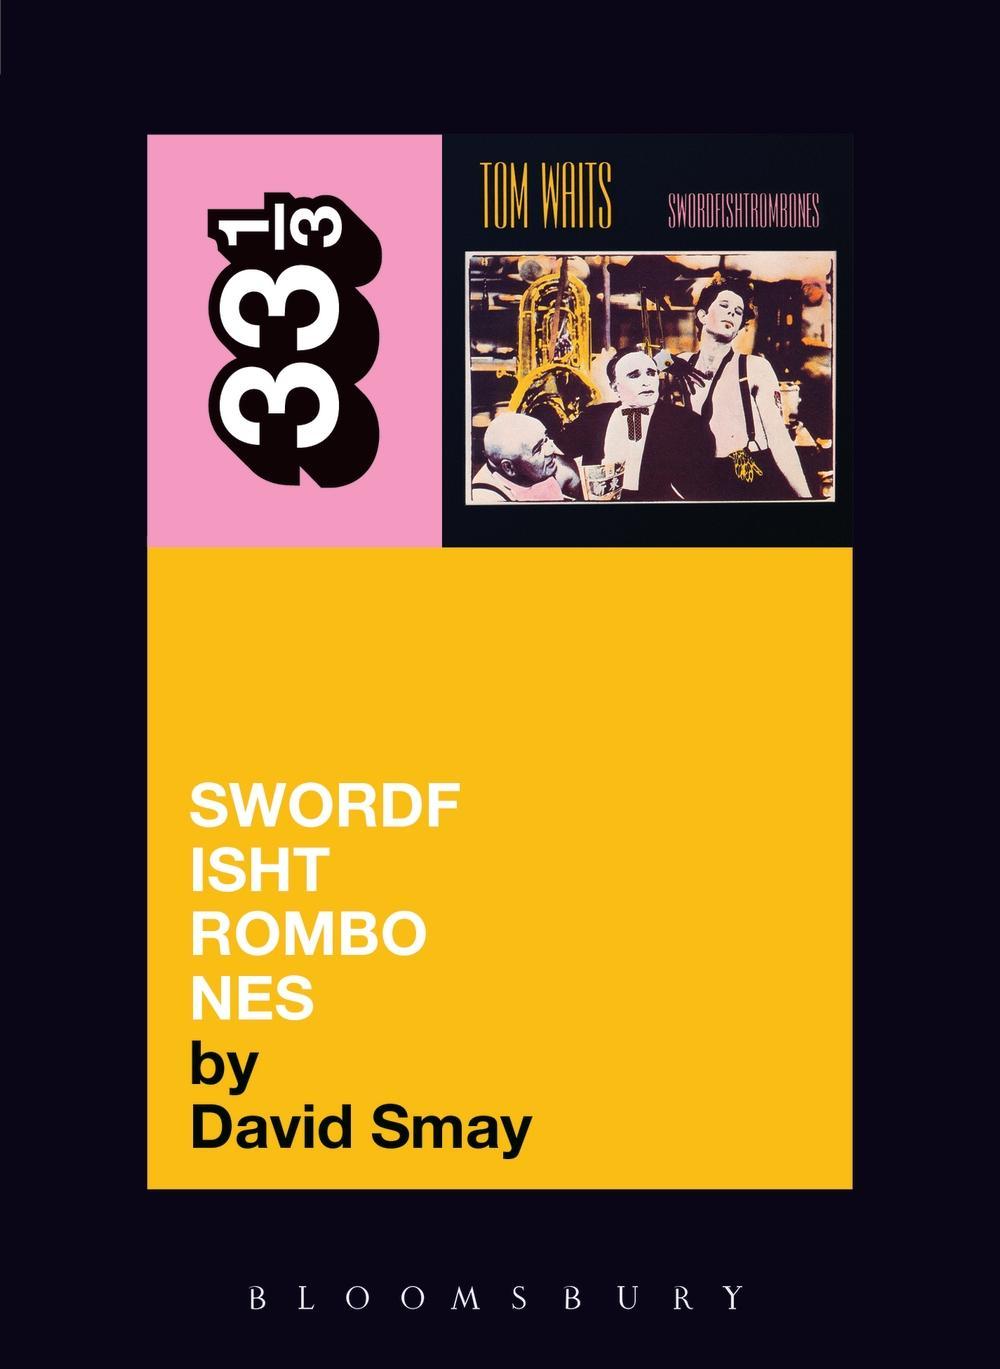 Tom Waits' Swordfishtrombones - David Smay